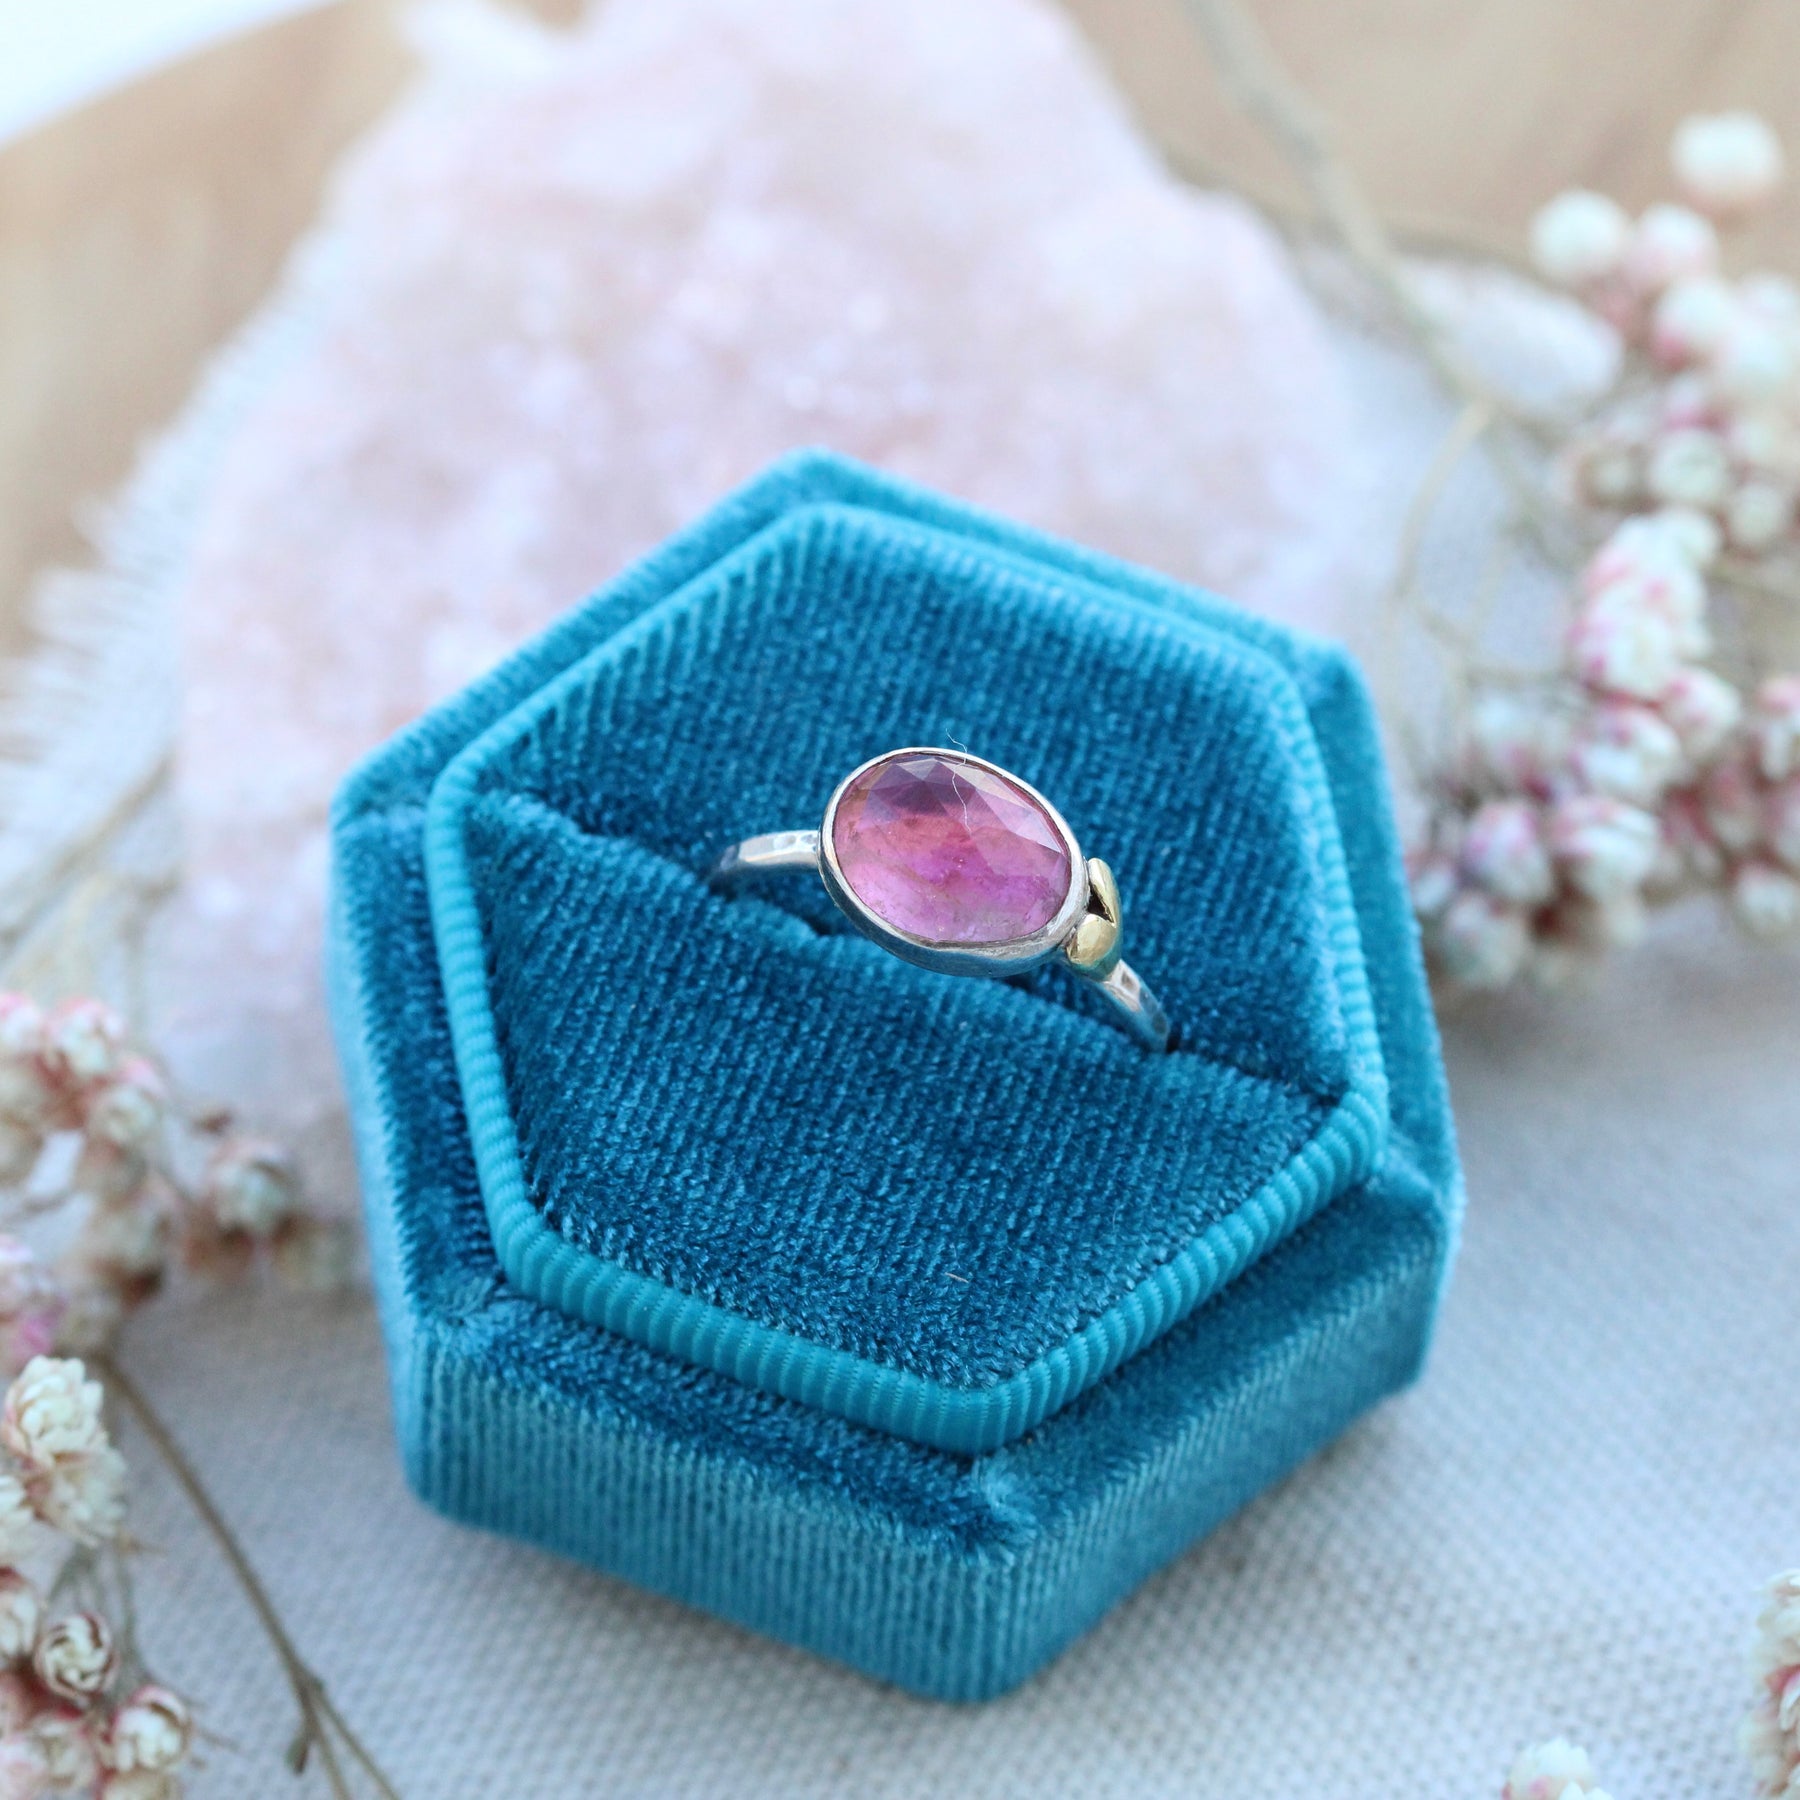 Sacred Love Pink Tourmaline gemstone sterling silver ring